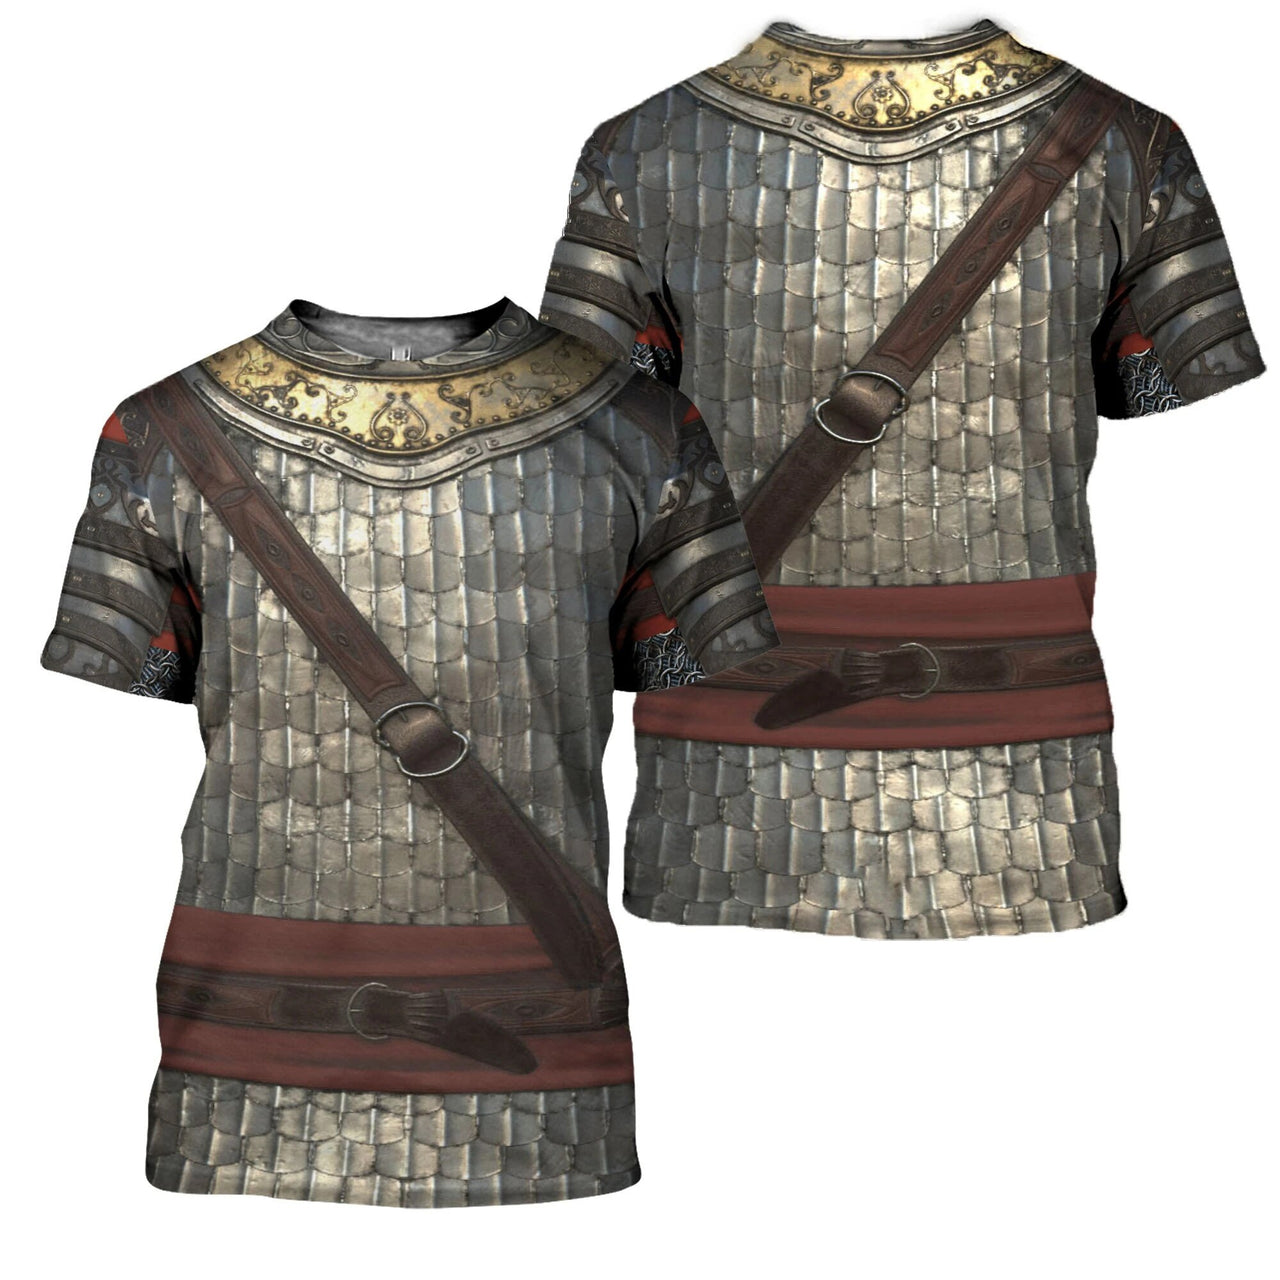 3D Printed Chainmail Knight Armor Men t shirt Knights Templar Fashion Short sleeve shirt summer hip hop Unisex tshirt